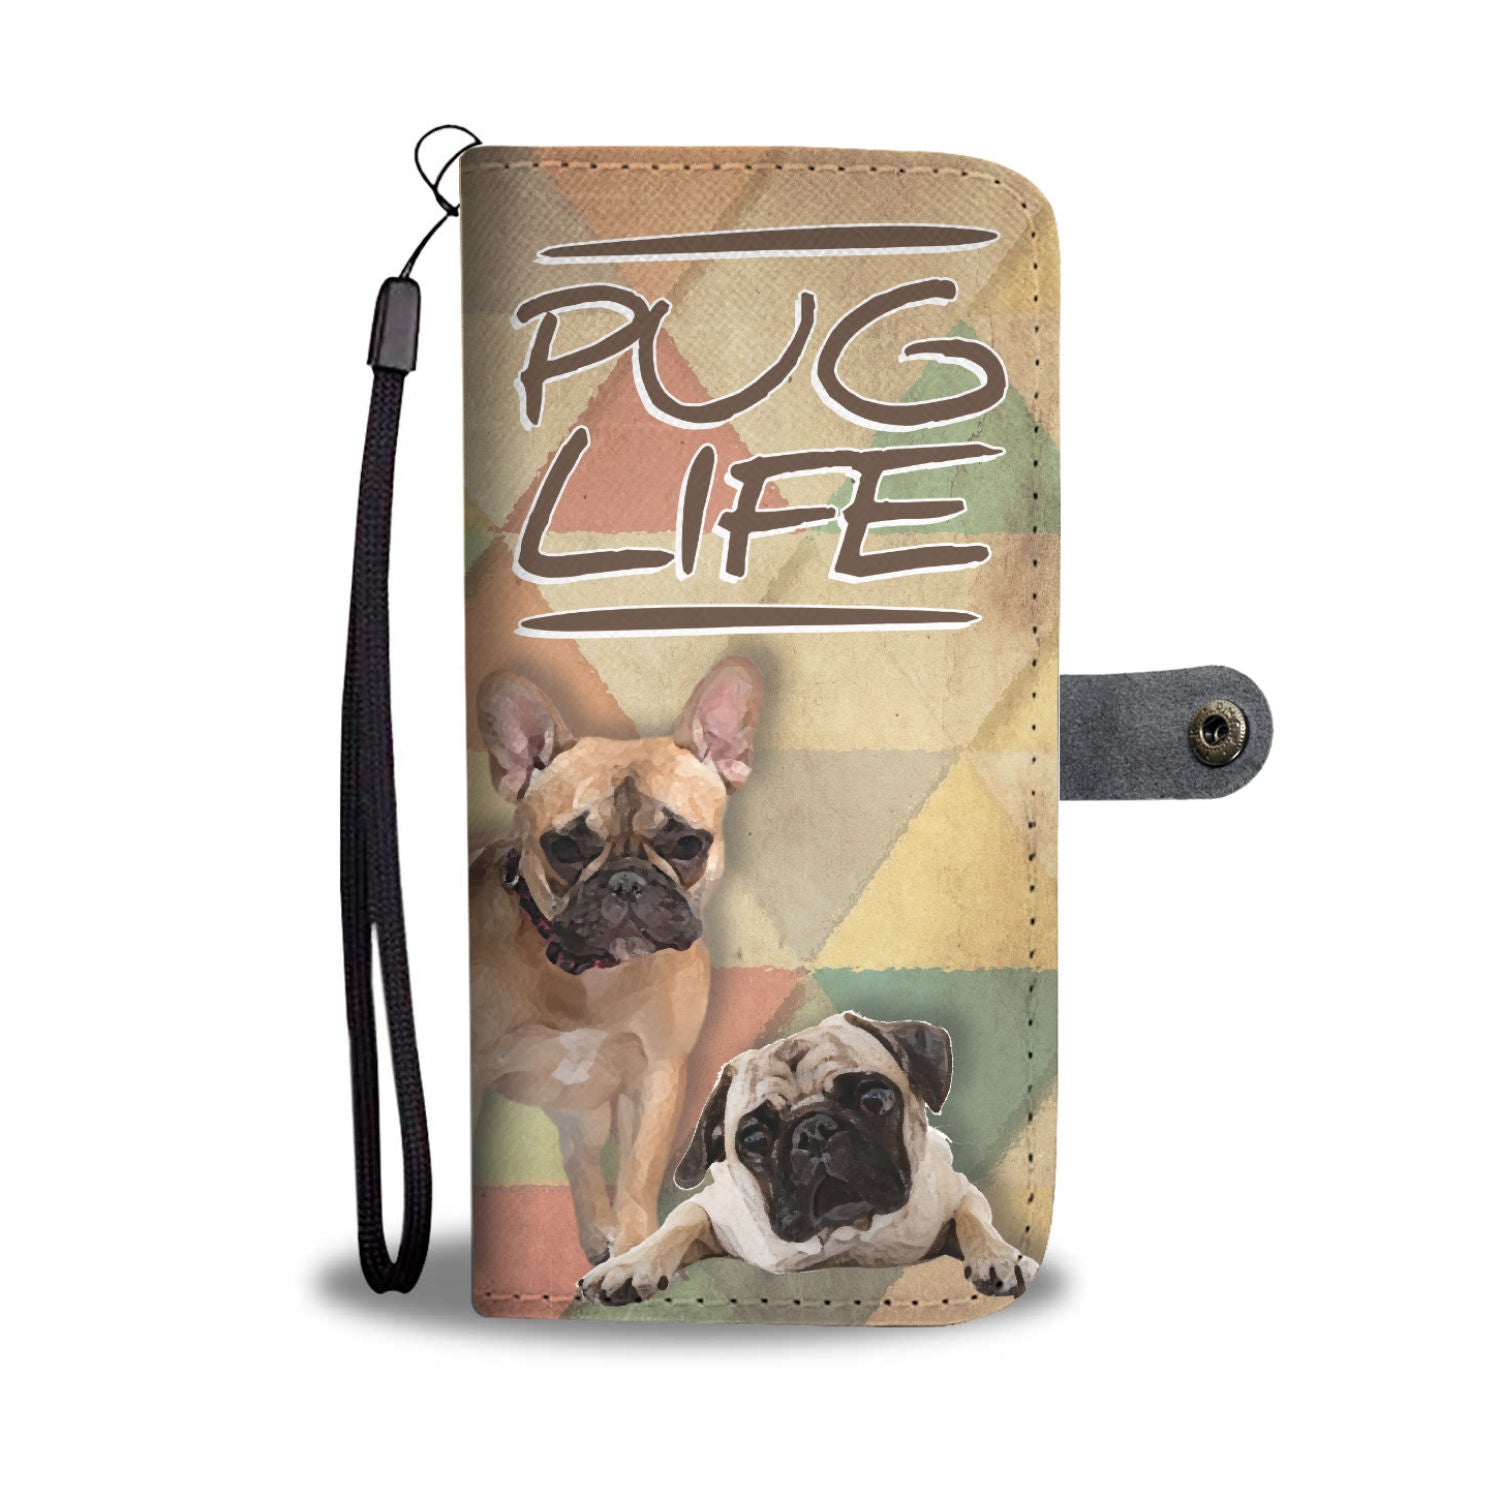 Pug Life Phone Case Wallet